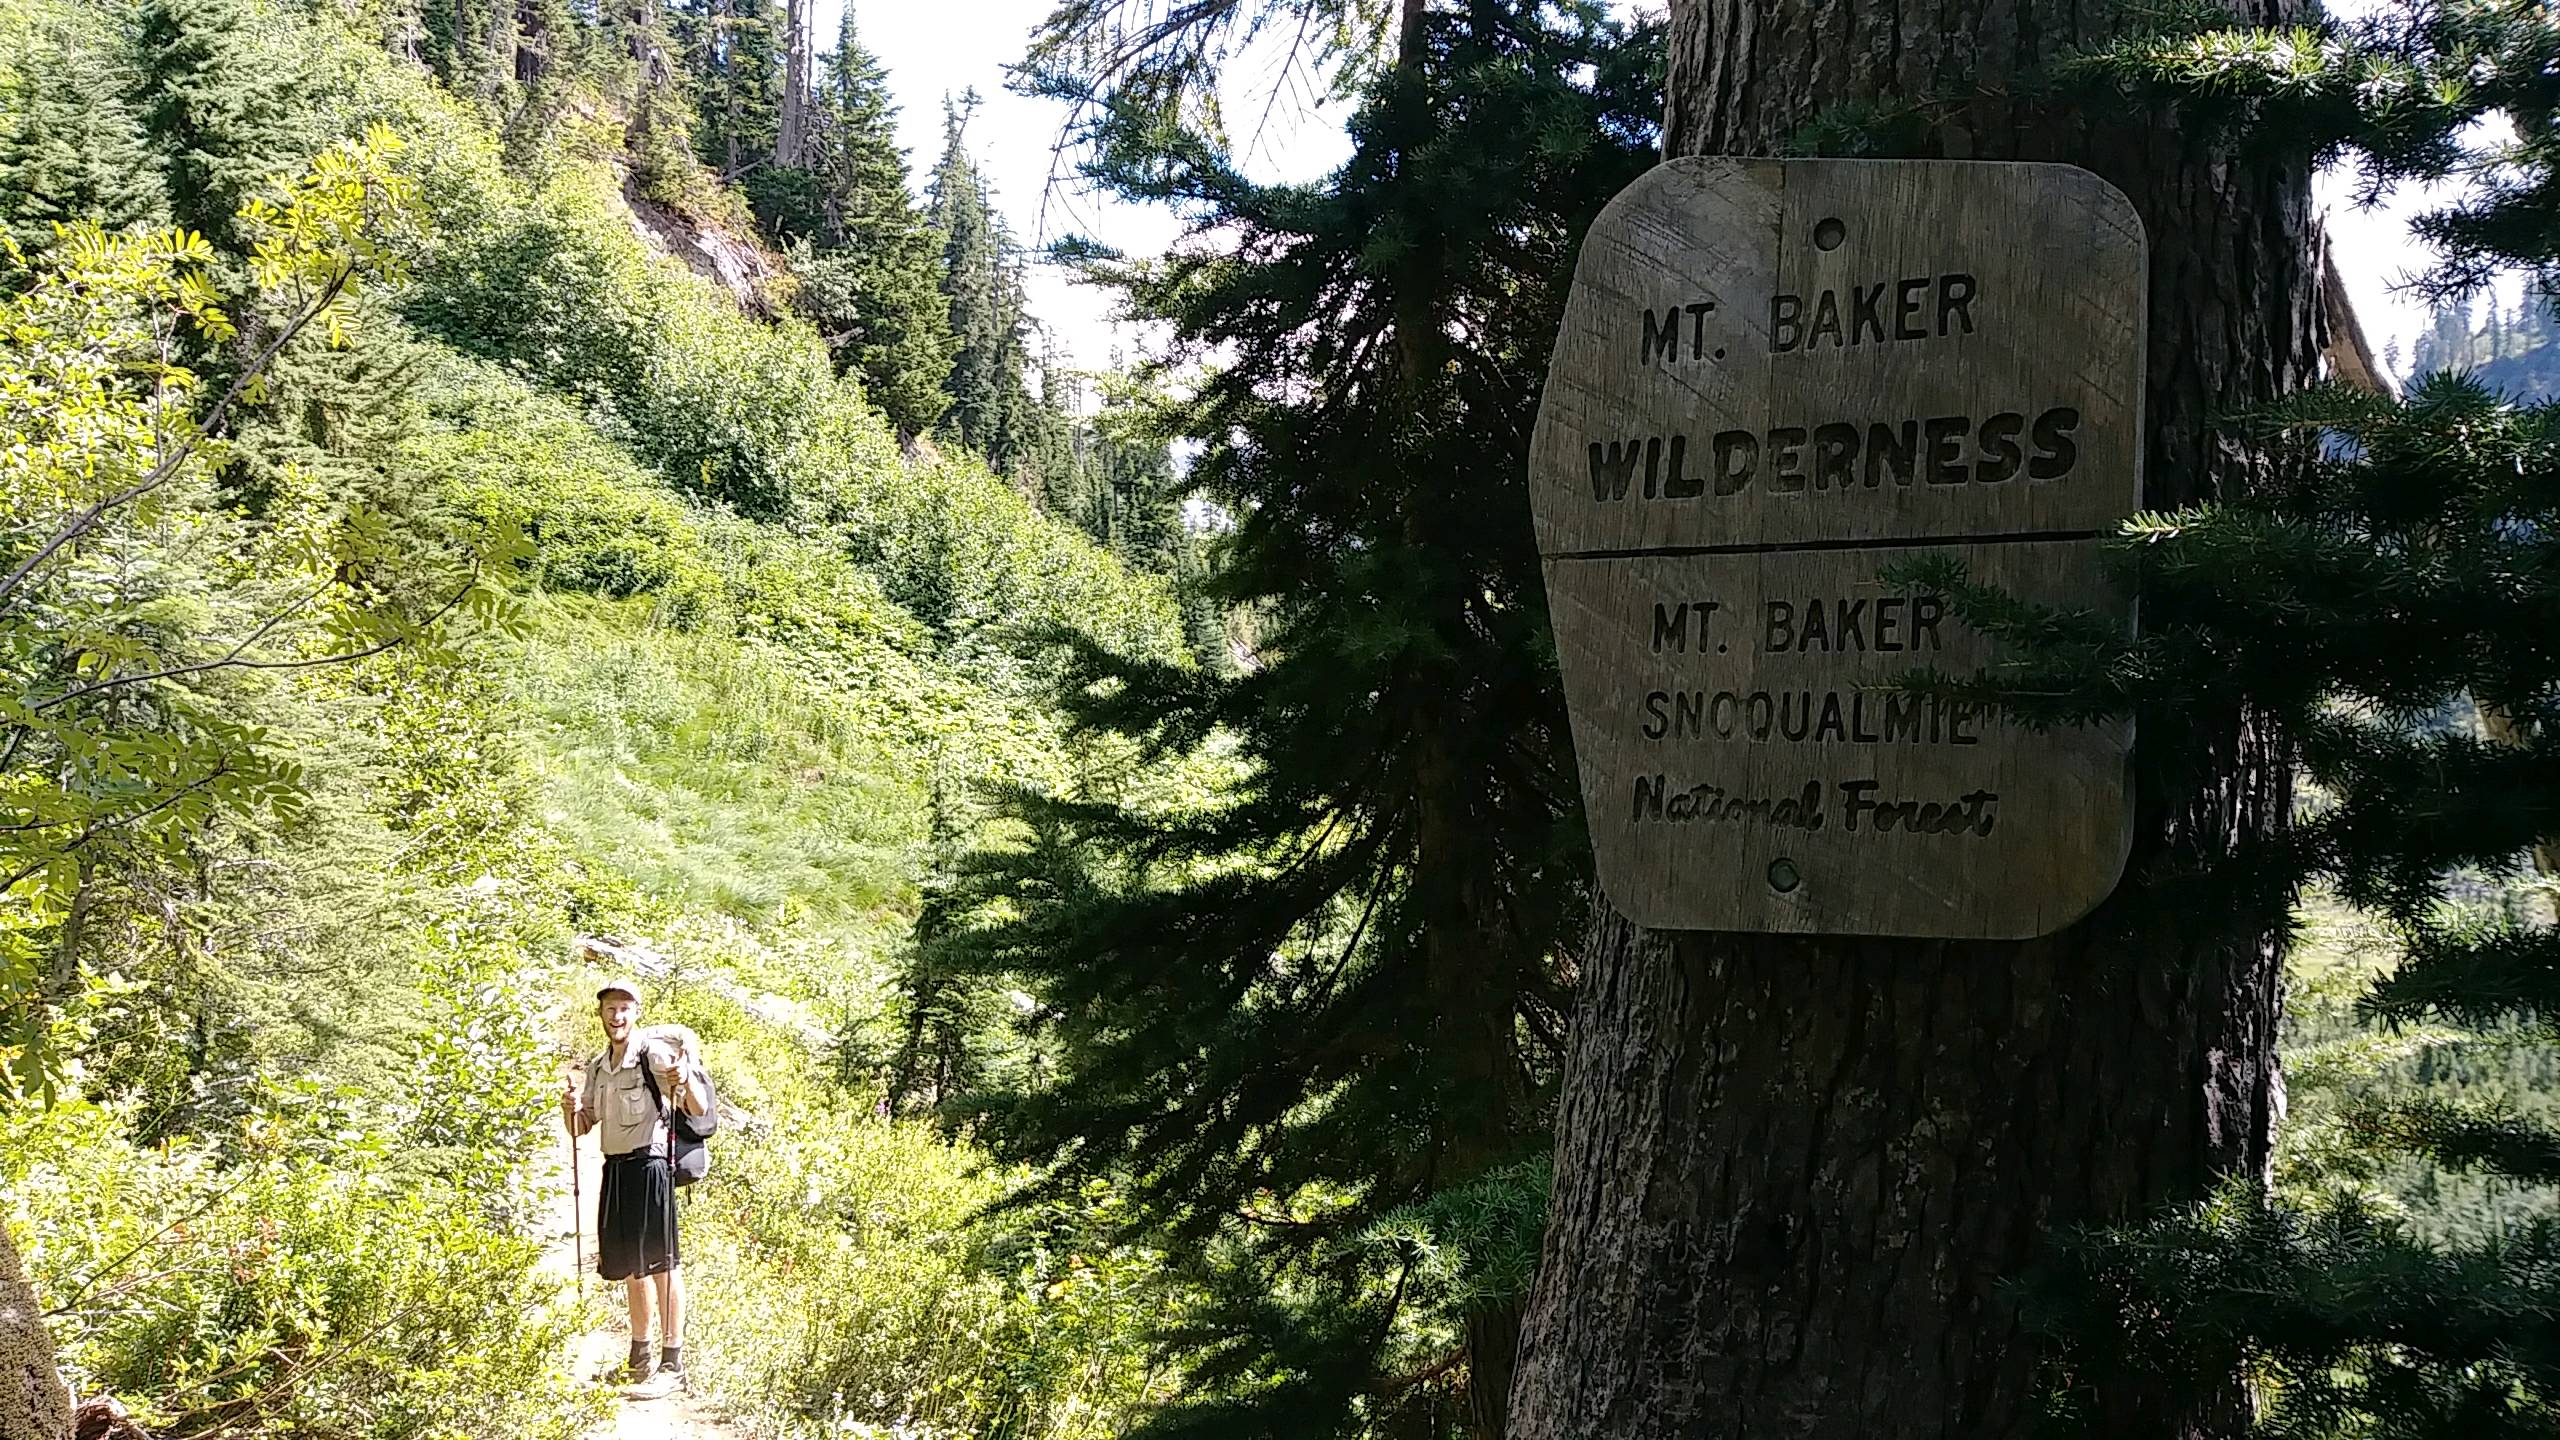 Mt. Baker Wilderness